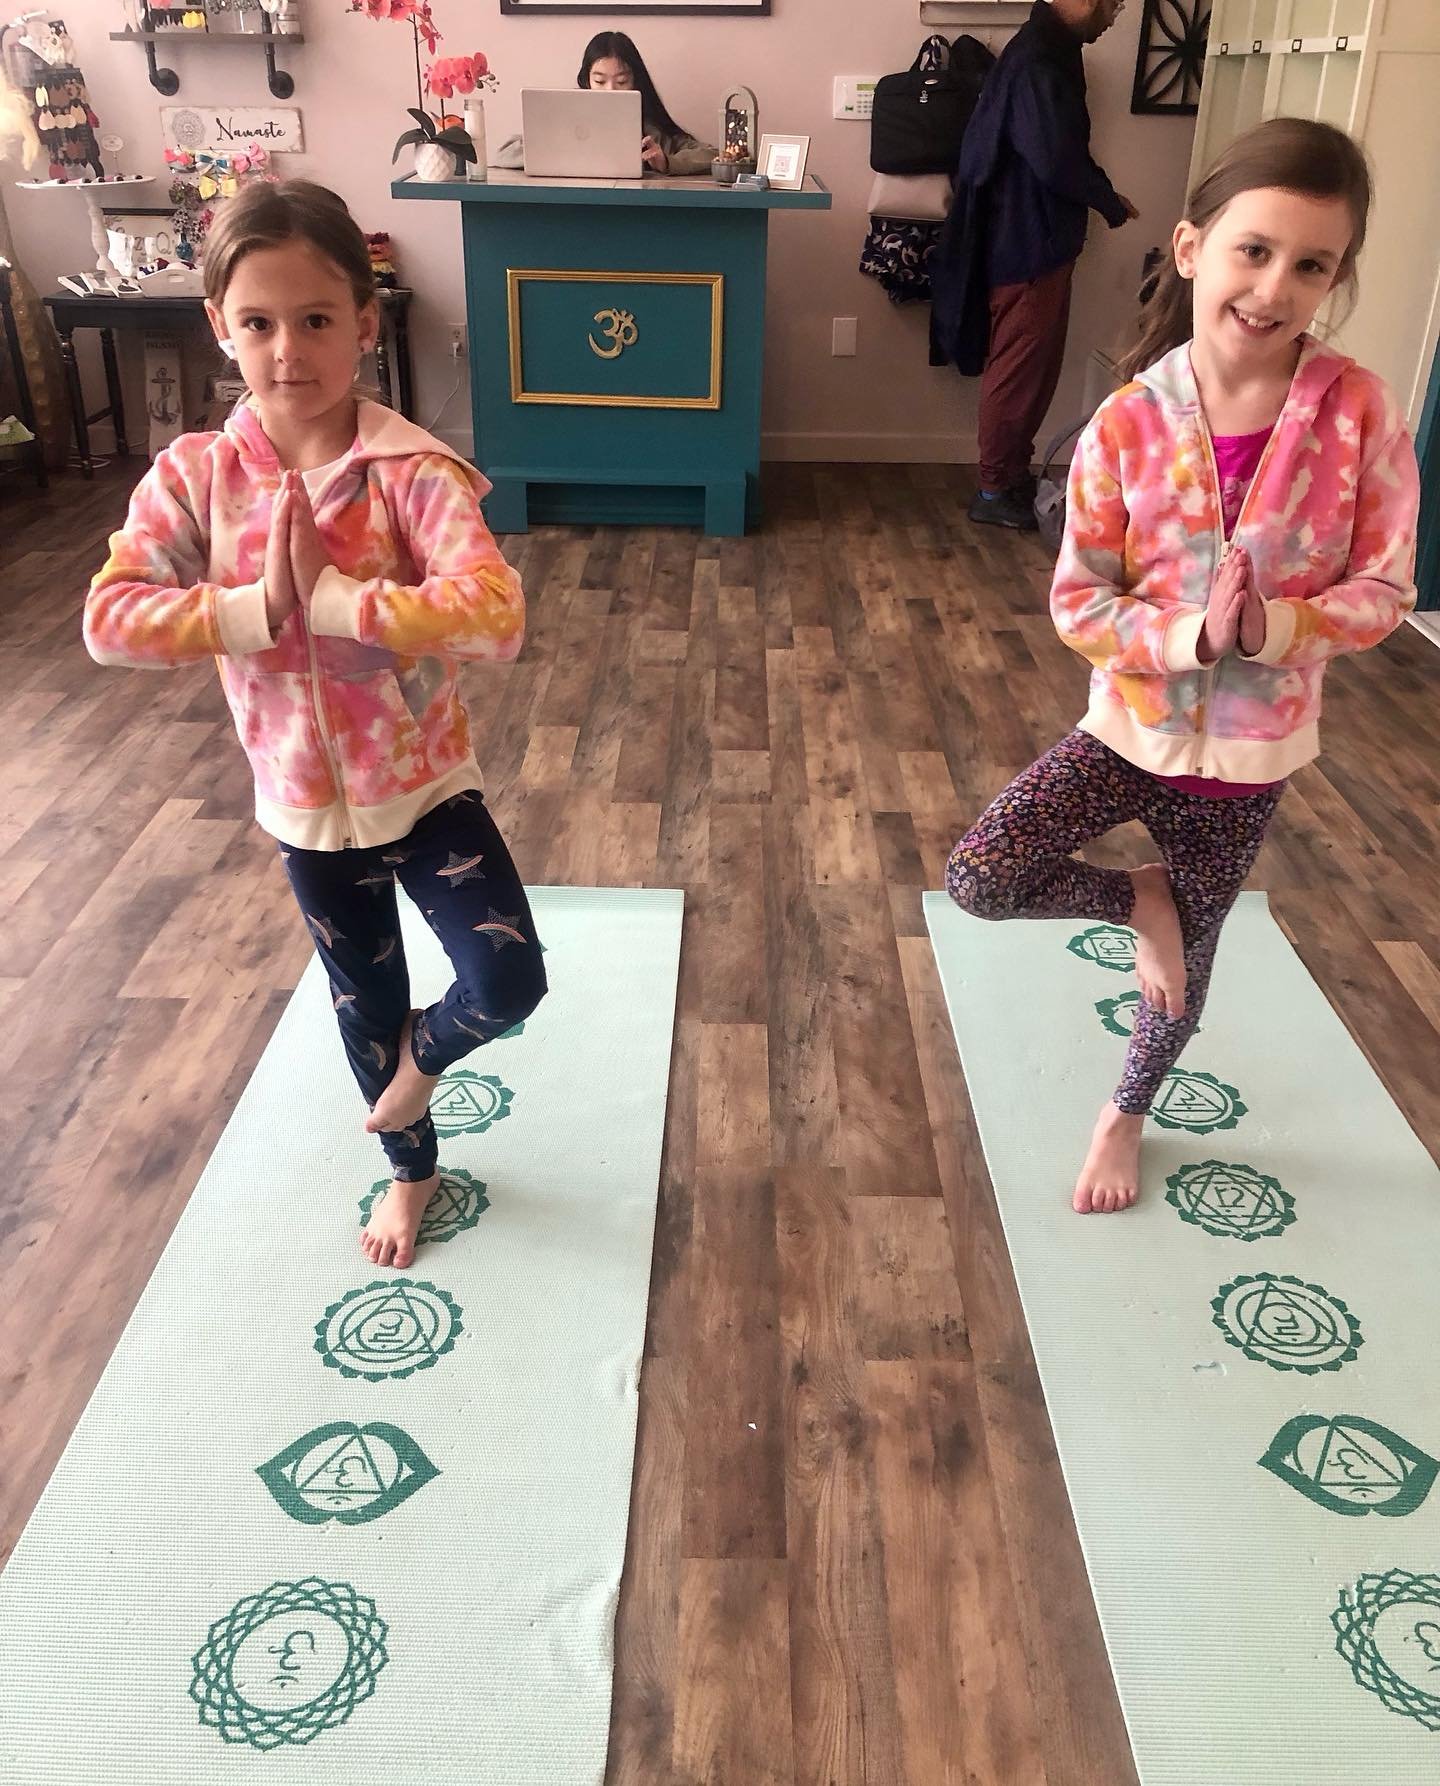 Yogi twinsies! 🥰
#kidsyoga #kidsactivities #saturday #northkingstown #northkingstownri #eastgreenwich #eastgreenwichri #rhodeisland